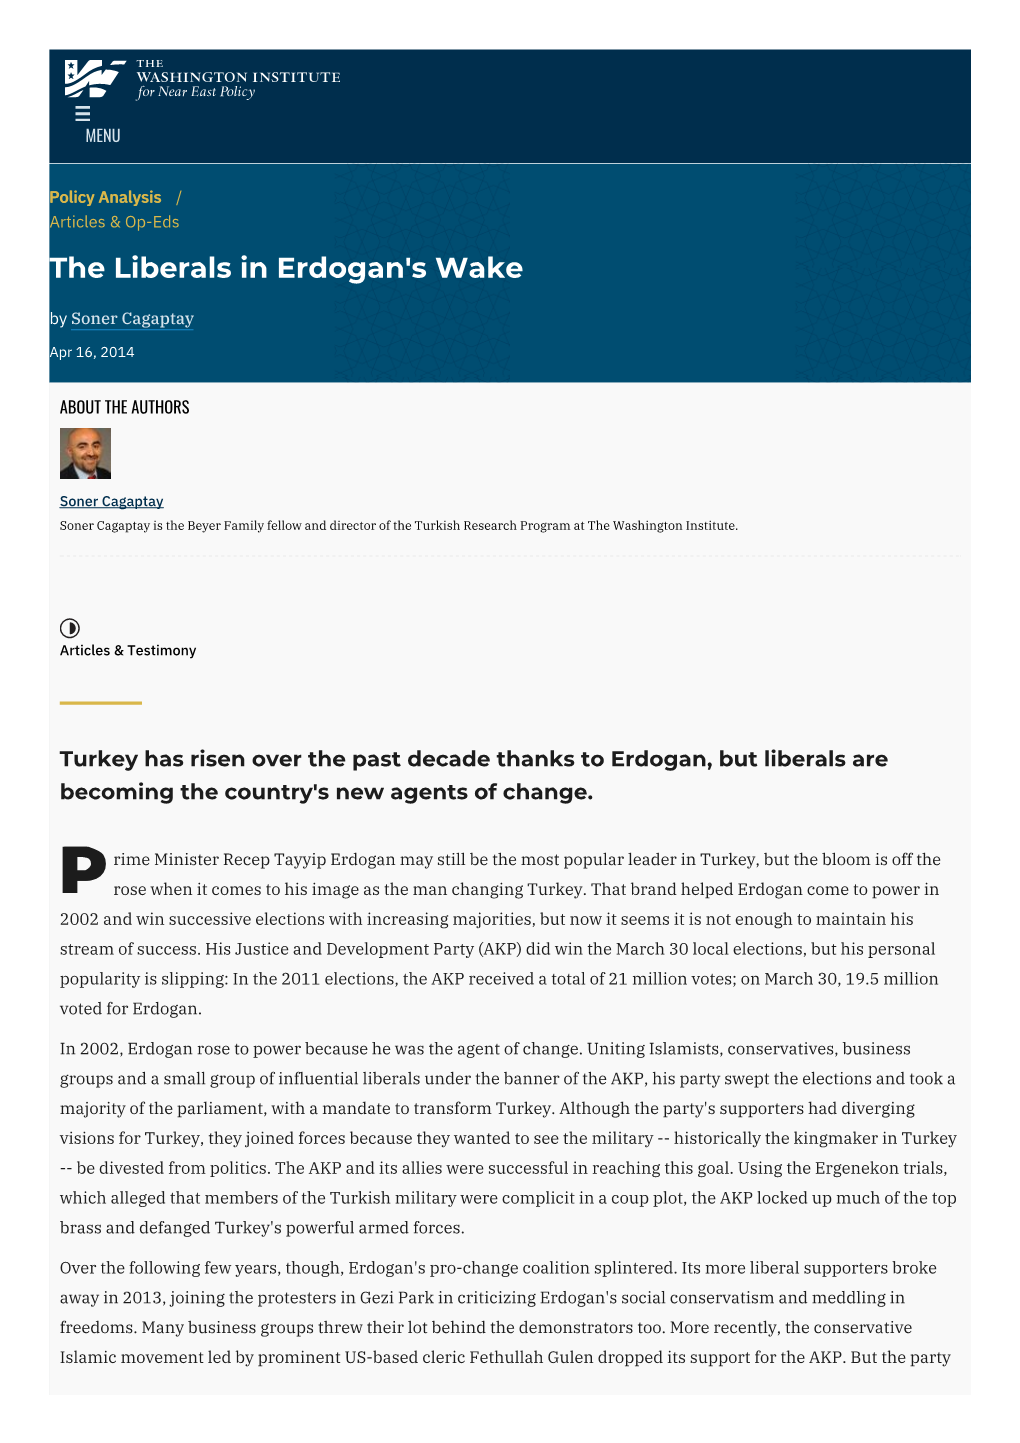 The Liberals in Erdogan's Wake | the Washington Institute